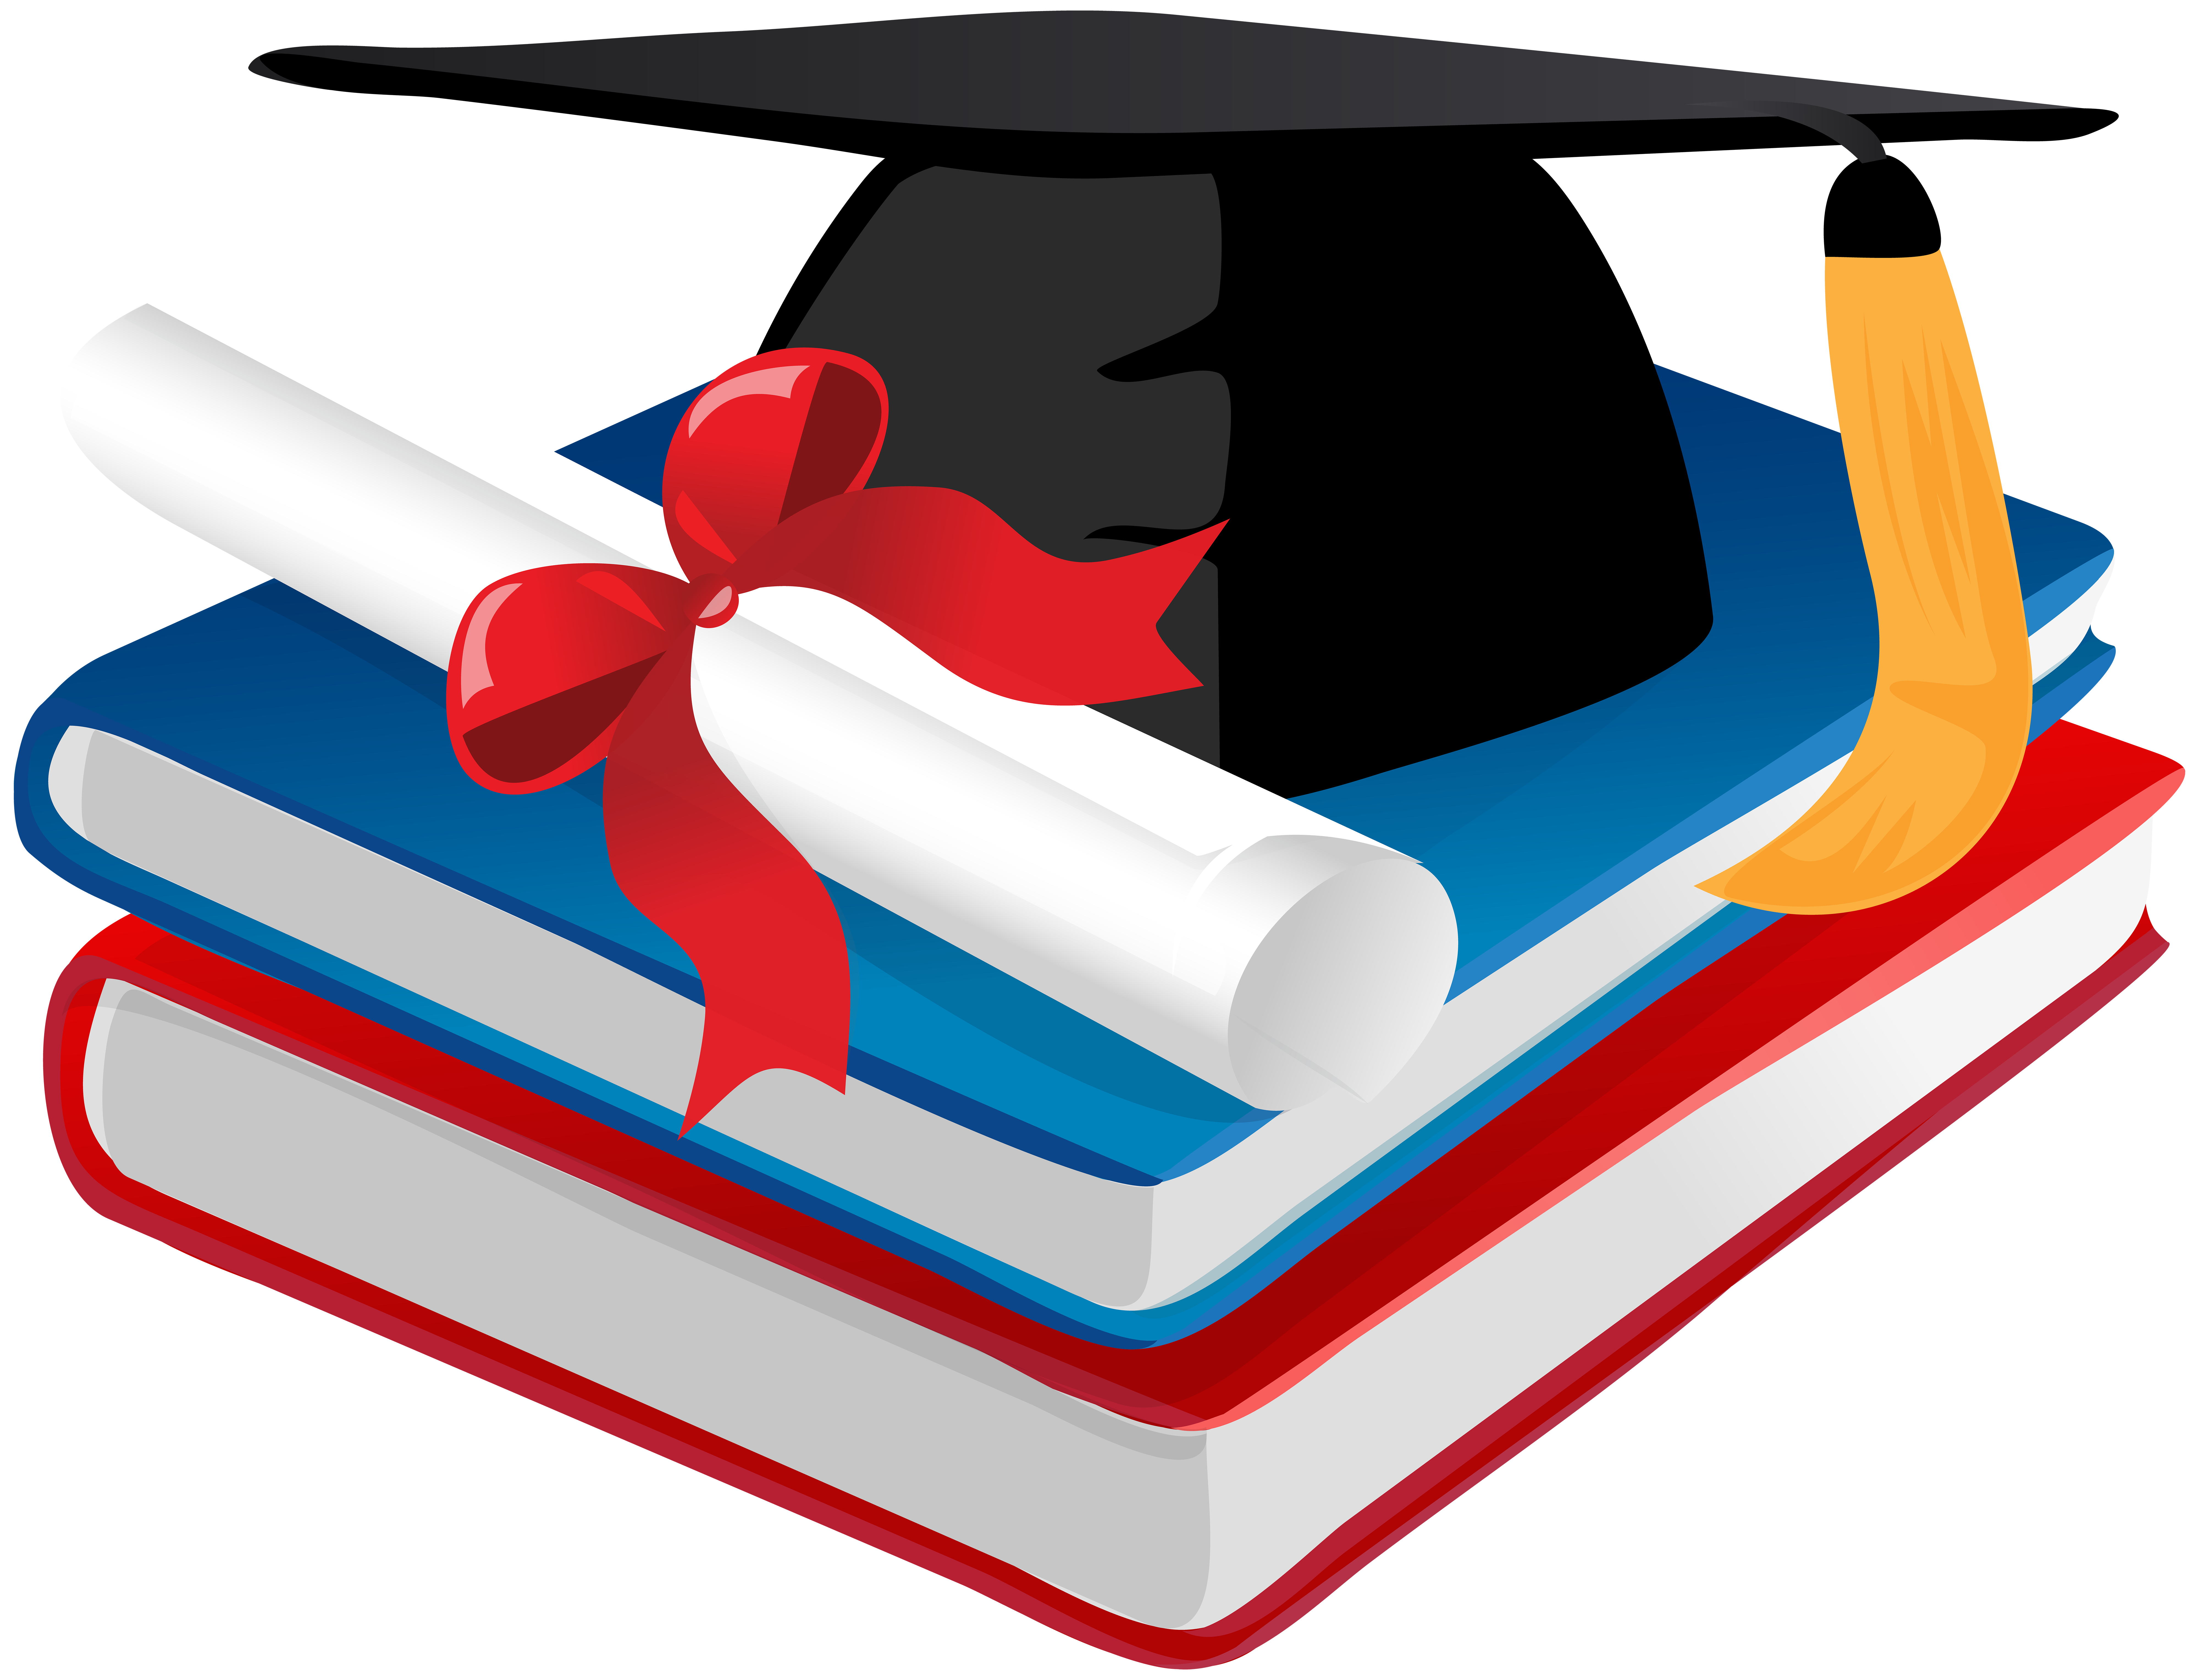 clipart graduation diploma